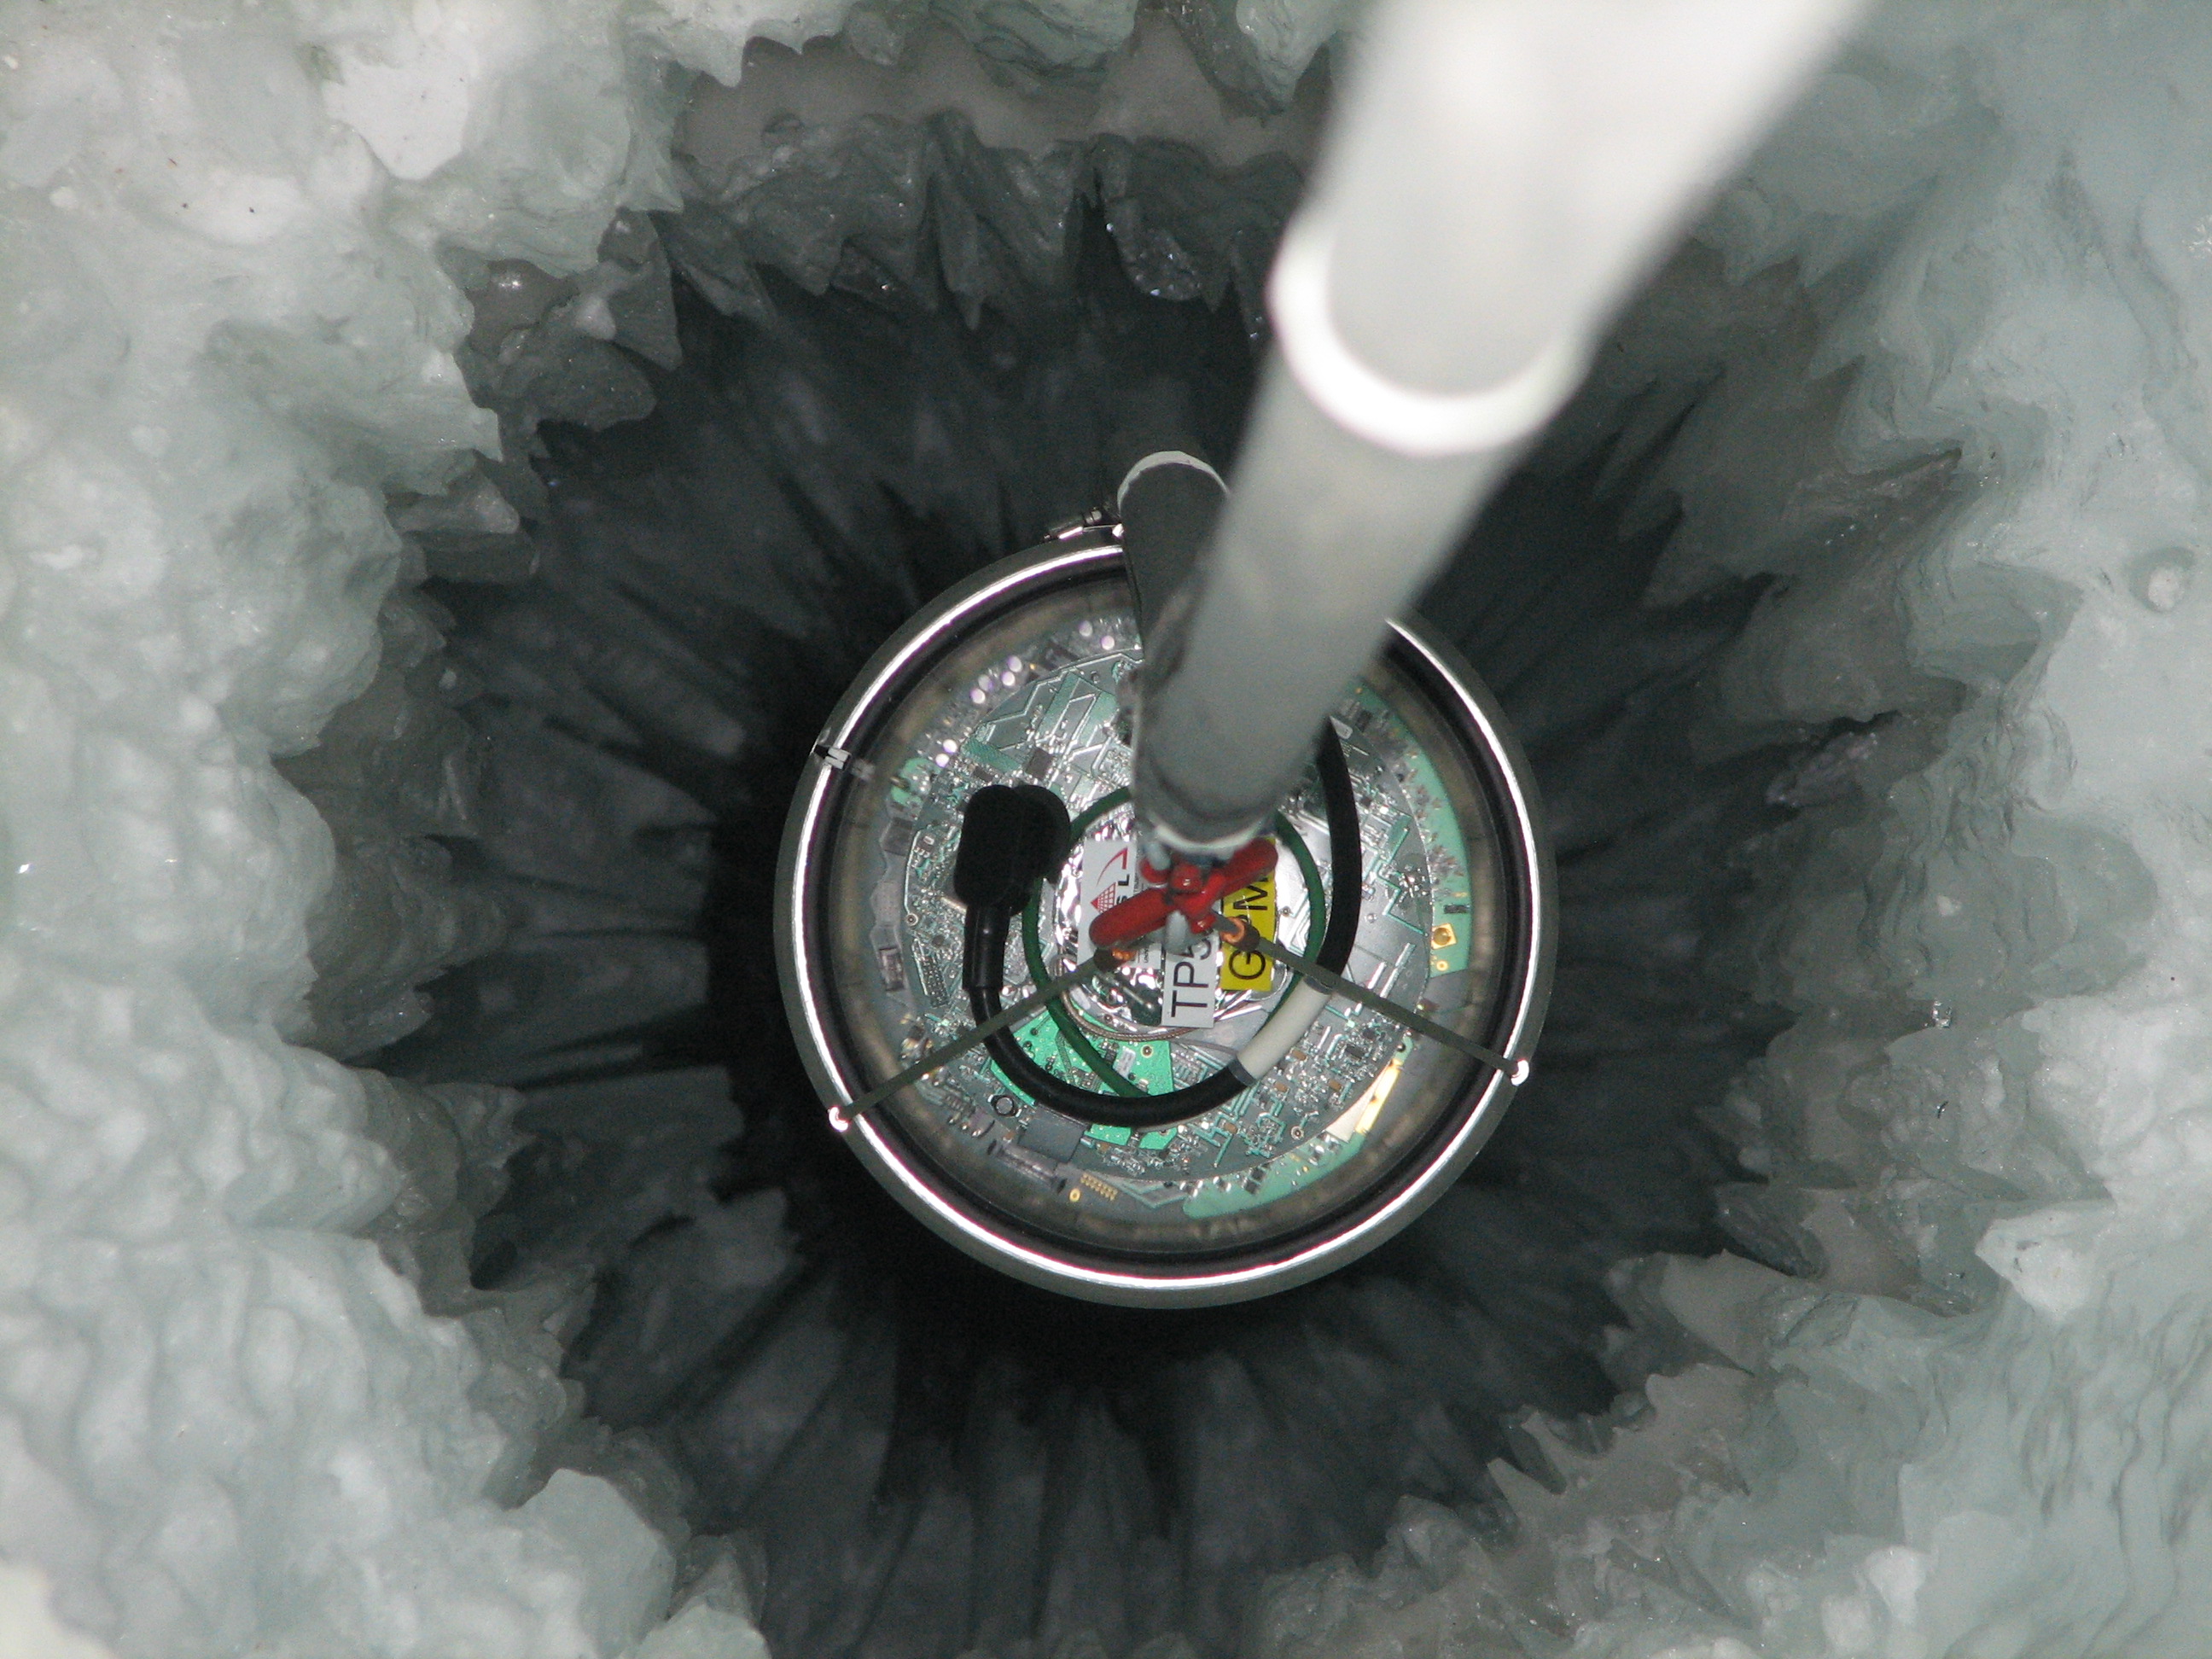 Inside an IceCube string